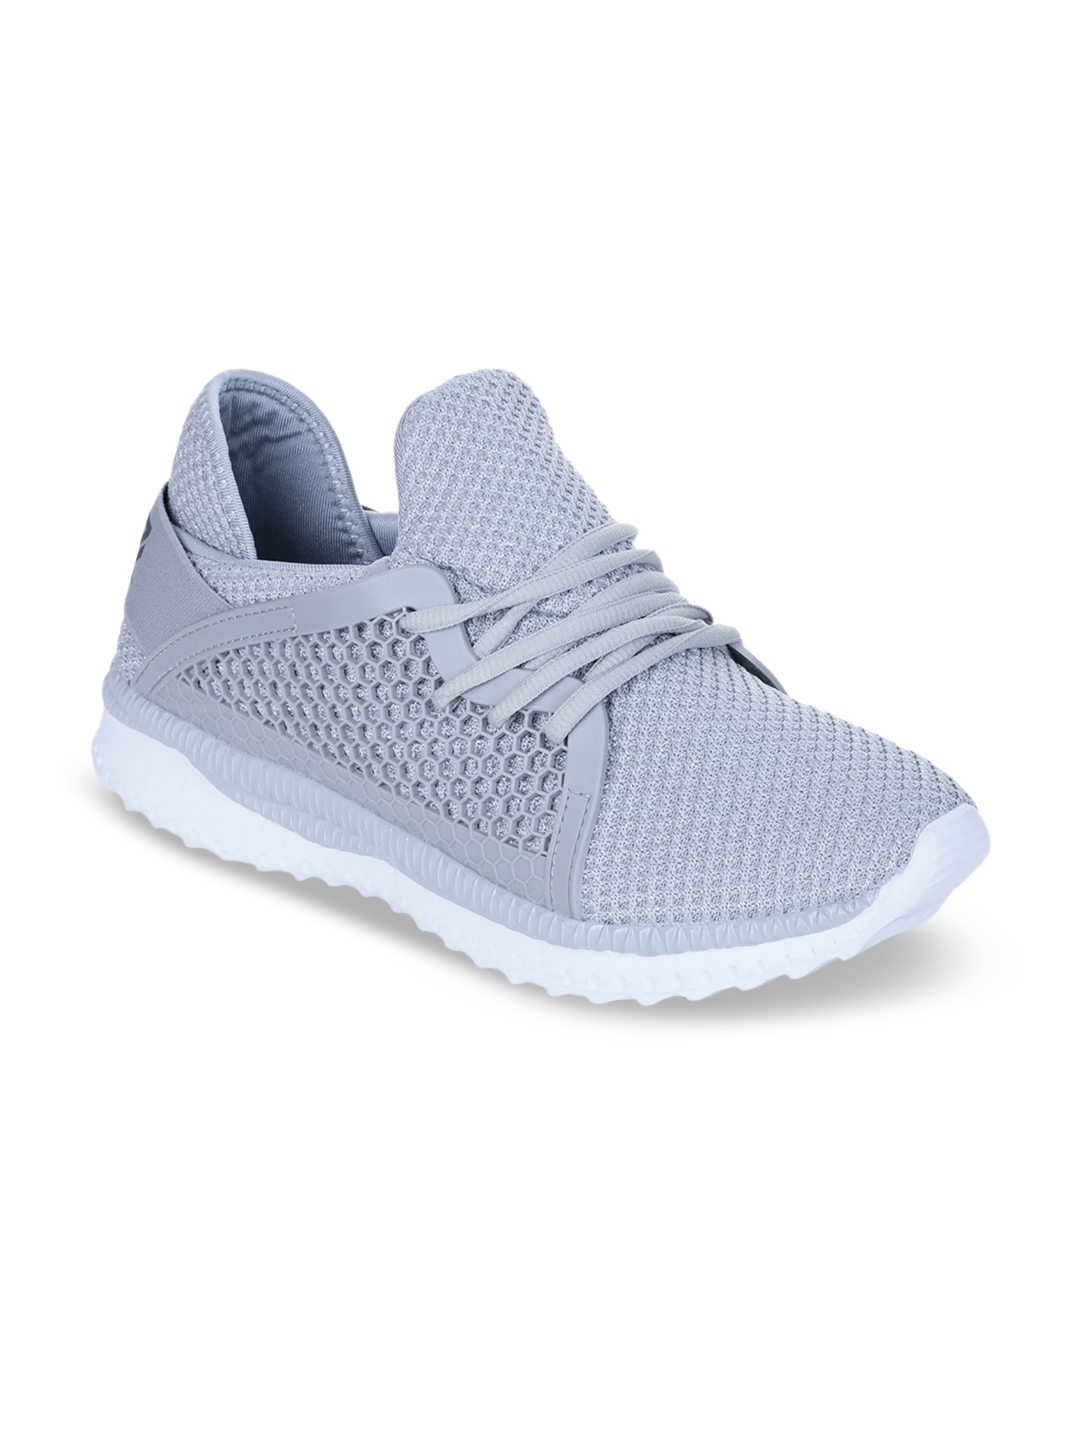 Buy Liberty Men Grey Running Shoes - Sports Shoes for Men 9470805 | Myntra